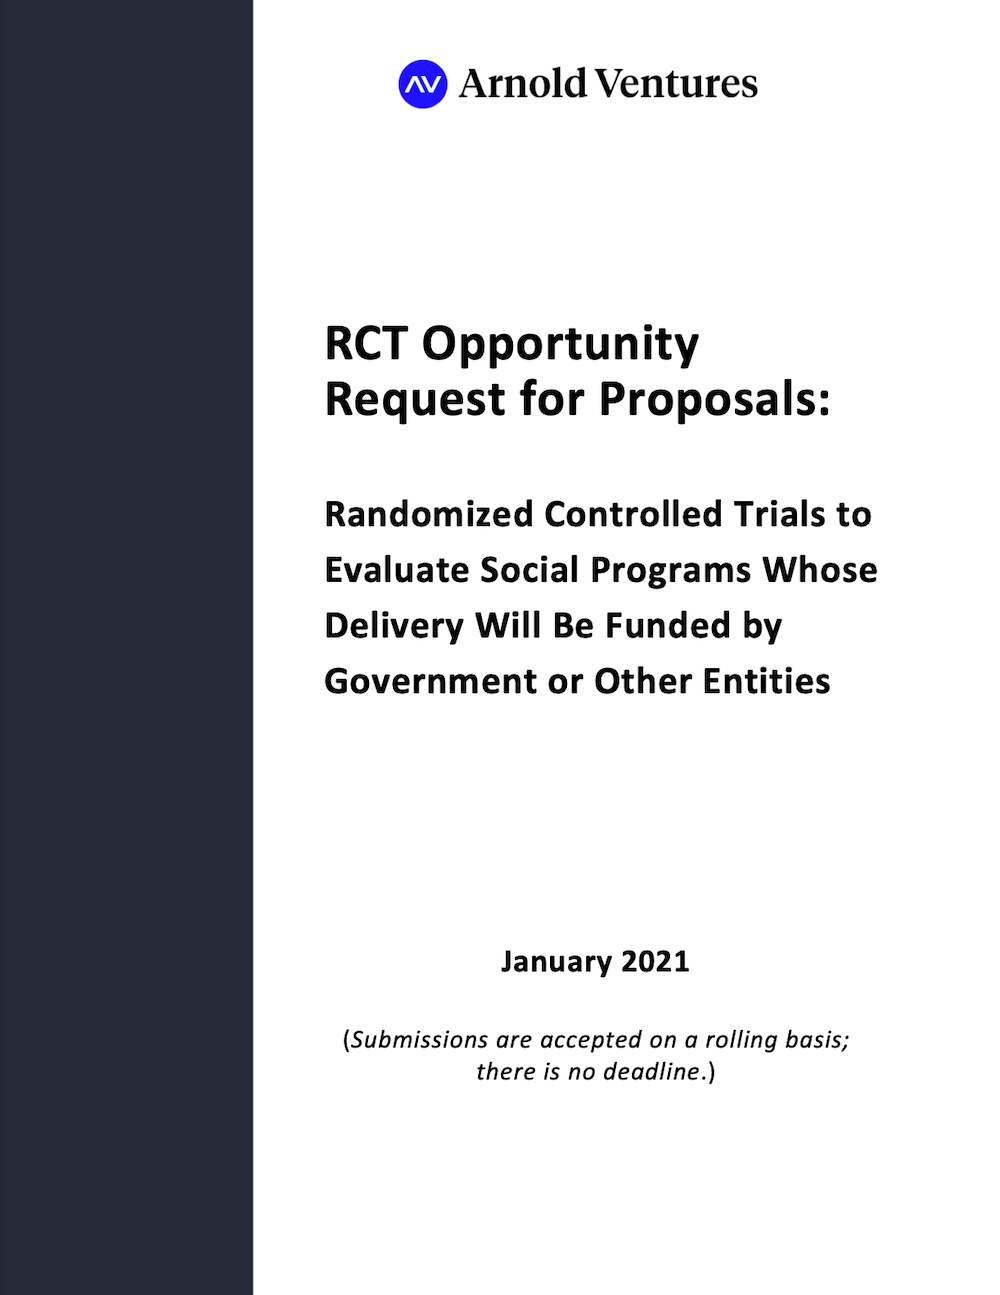 Arnold Foundation funding application for social programs randomized control trials